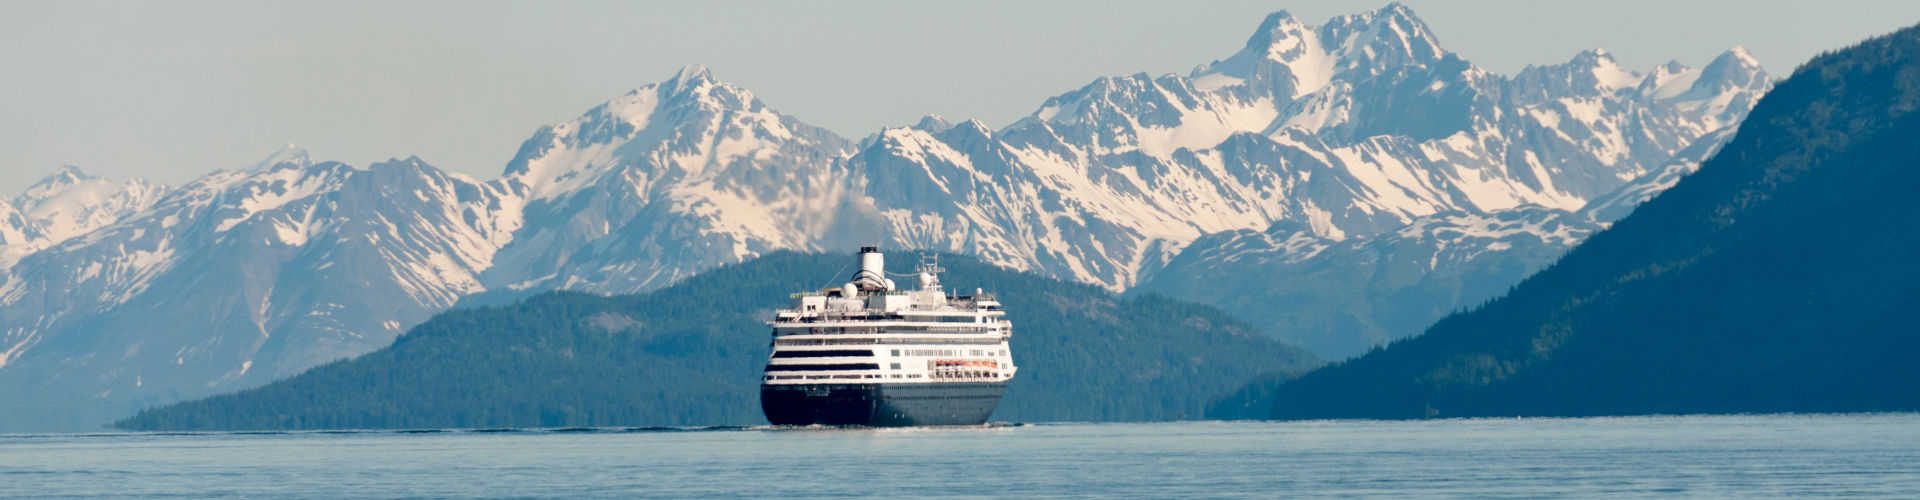 Cruising in Alaska. Credit: Getty Images.